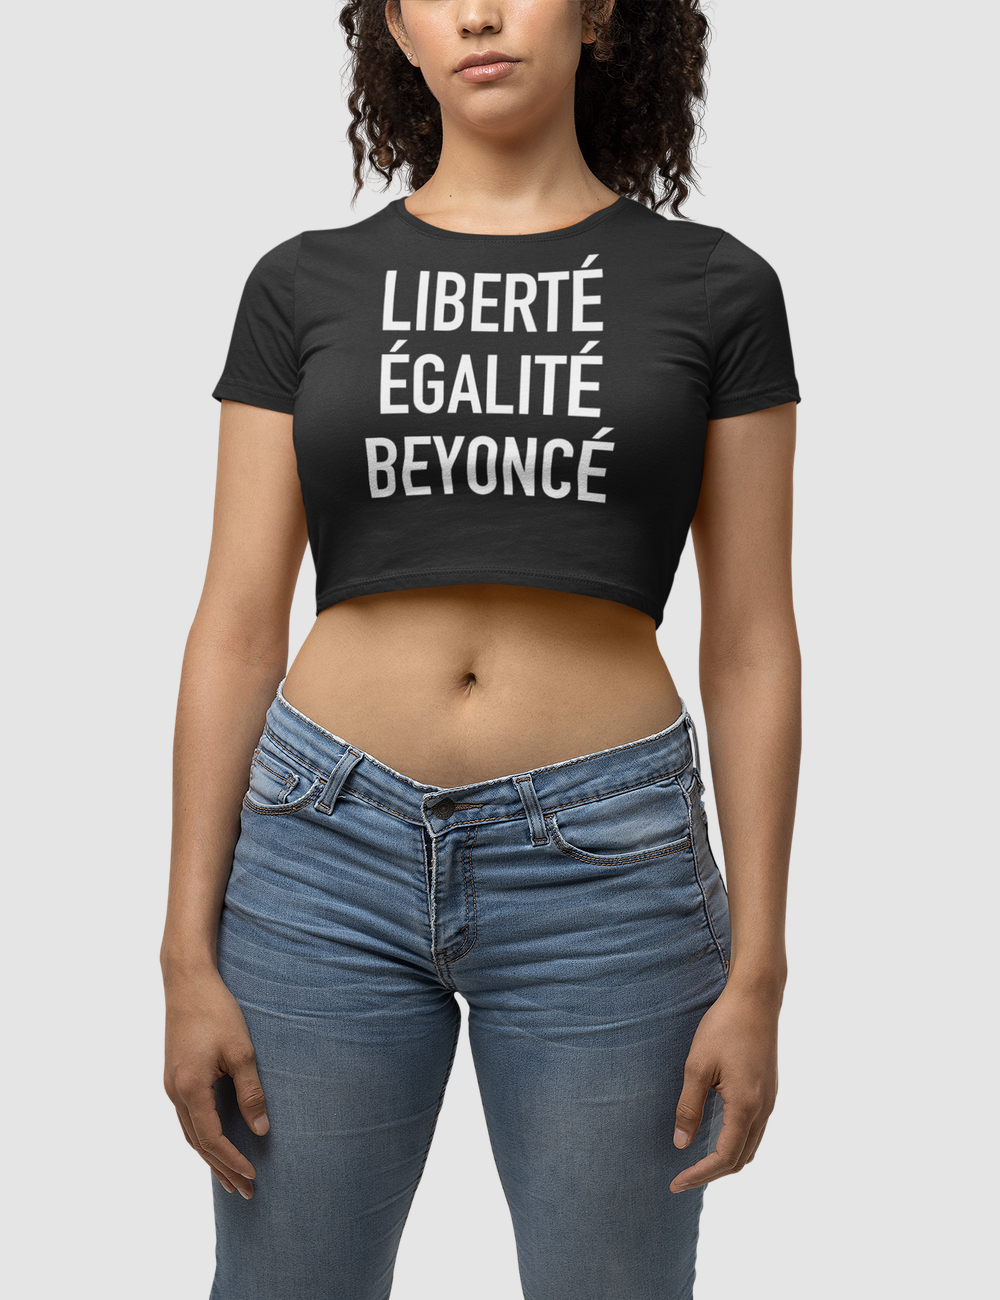 Liberté Égalité Beyoncé Women's Fitted Black Crop Top T-Shirt - OniTakai